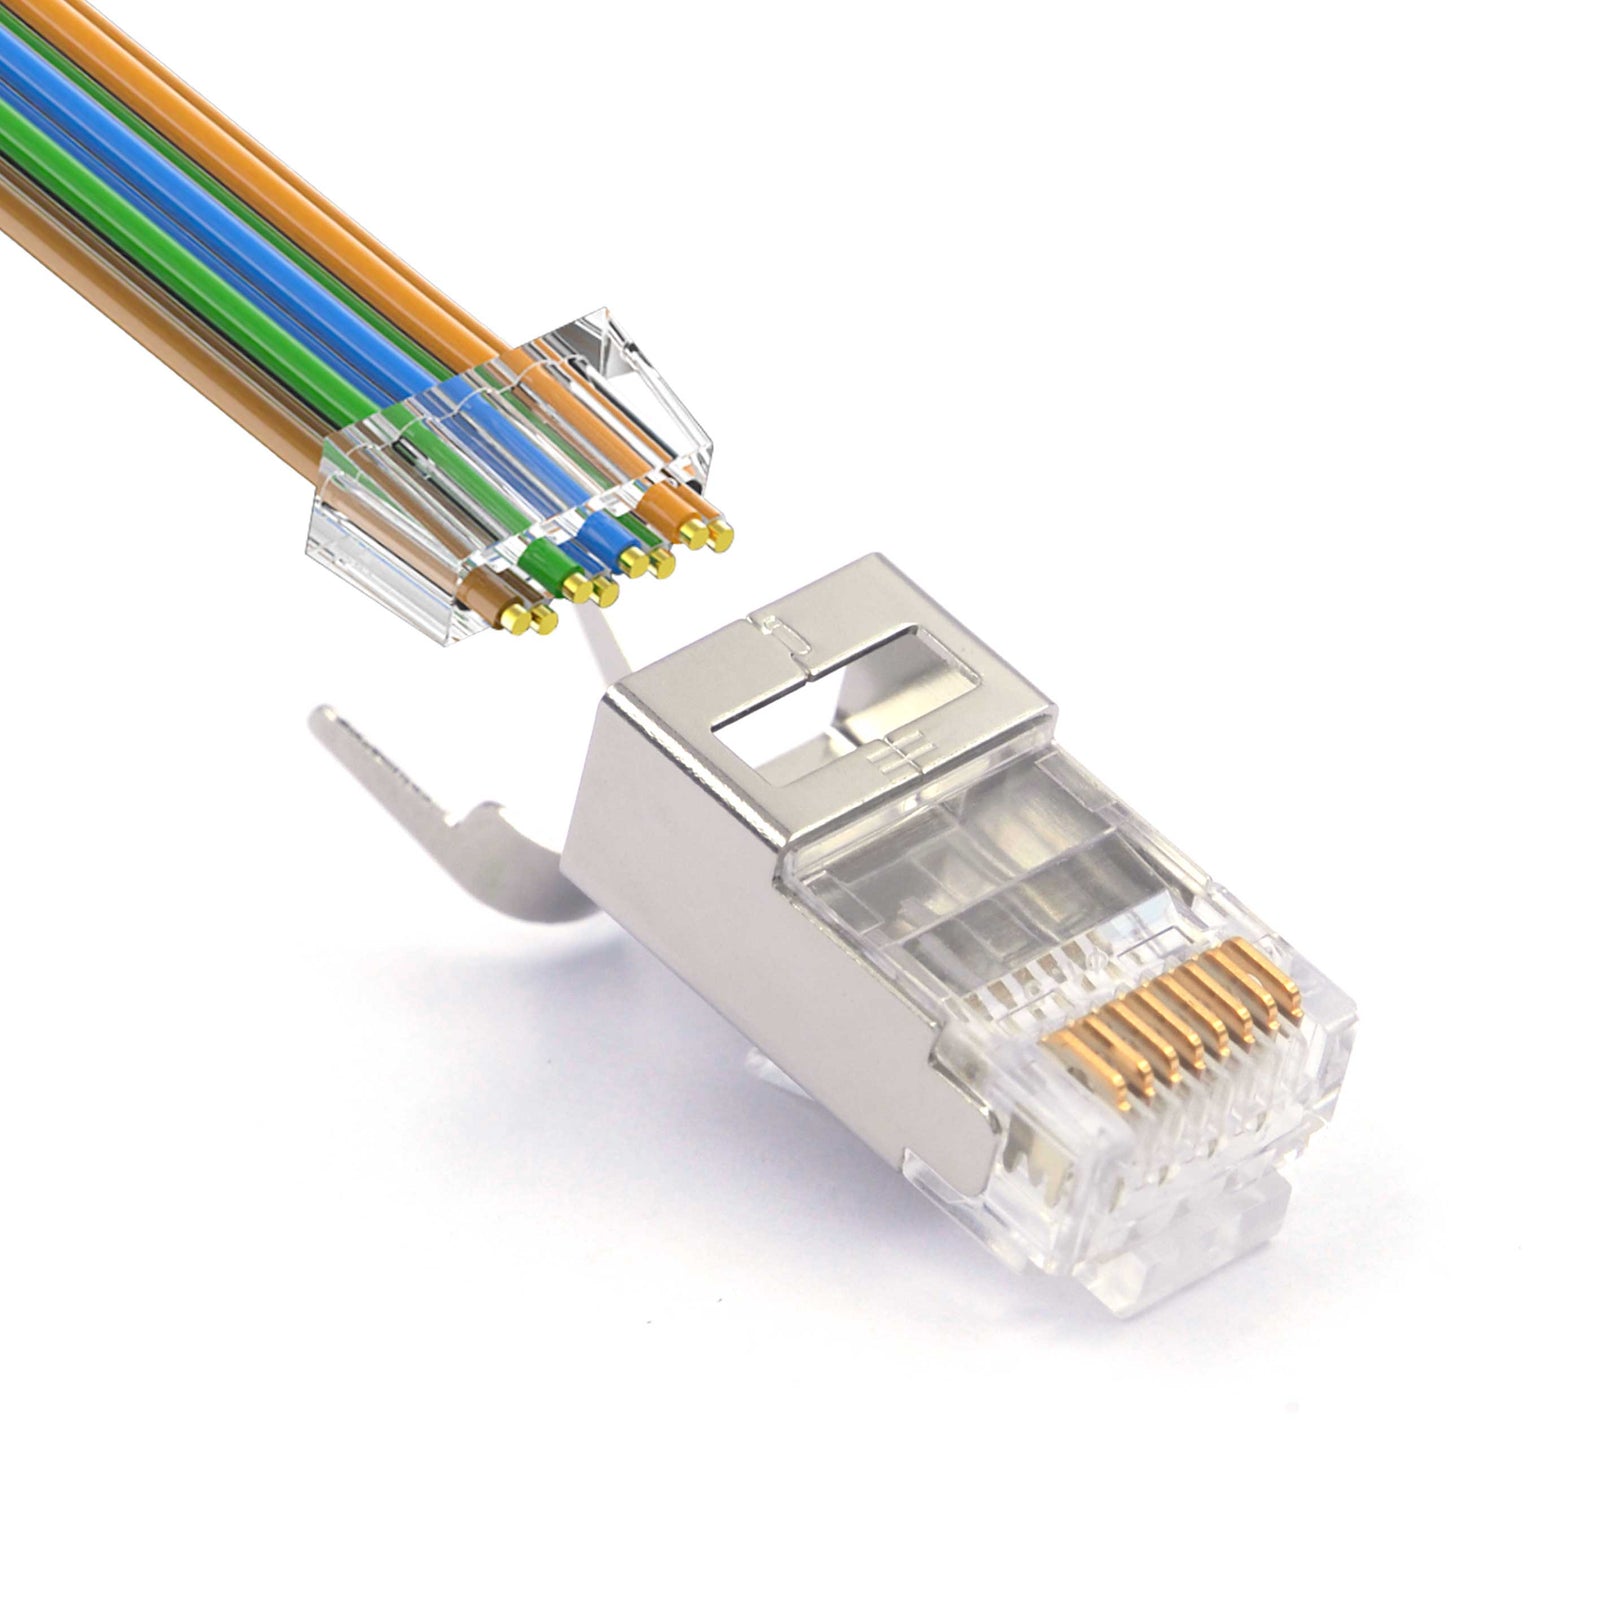 Cat7 network cable, RJ45 connectors